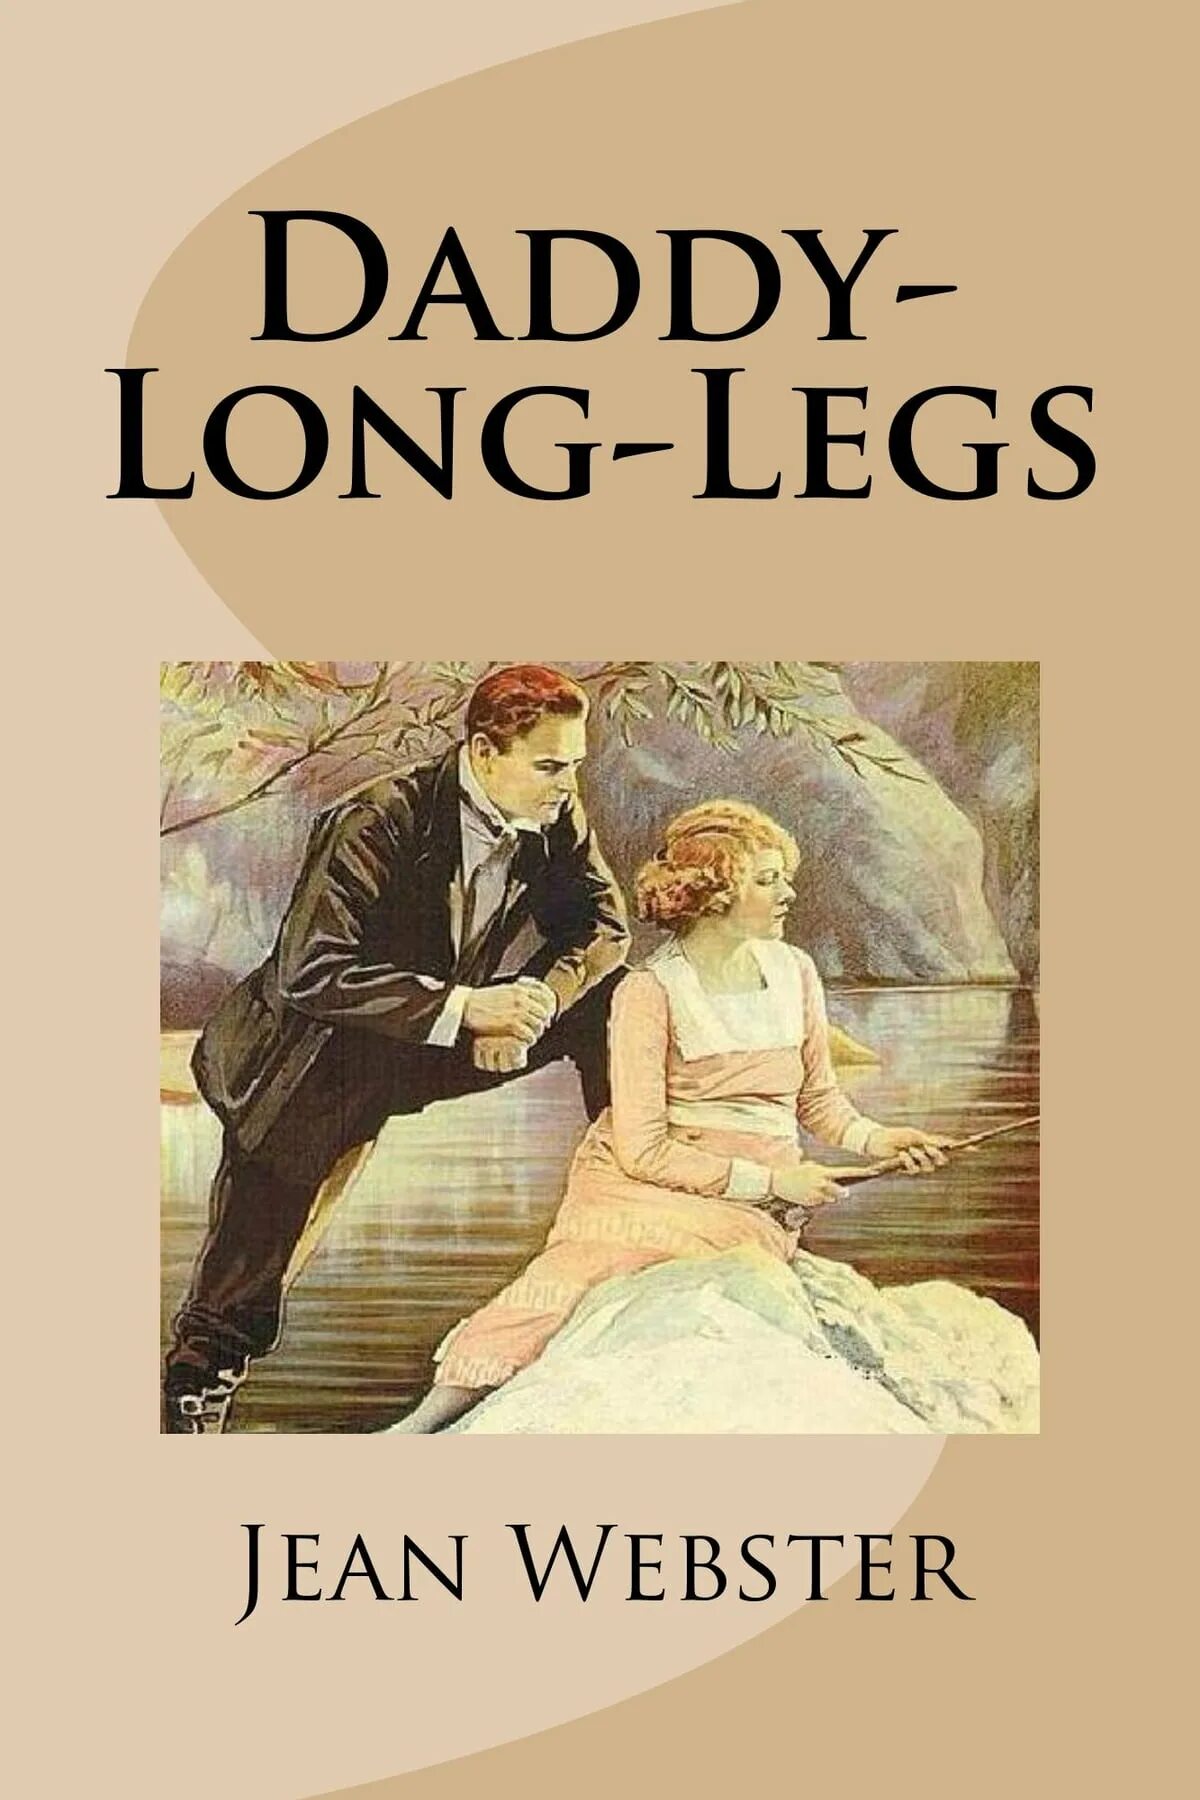 Legs book. Daddy long Legs книга. Webster Jean "Daddy-long-Legs". Daddy-long-Legs Джин Уэбстер книга. Длинноногий папочка книга.